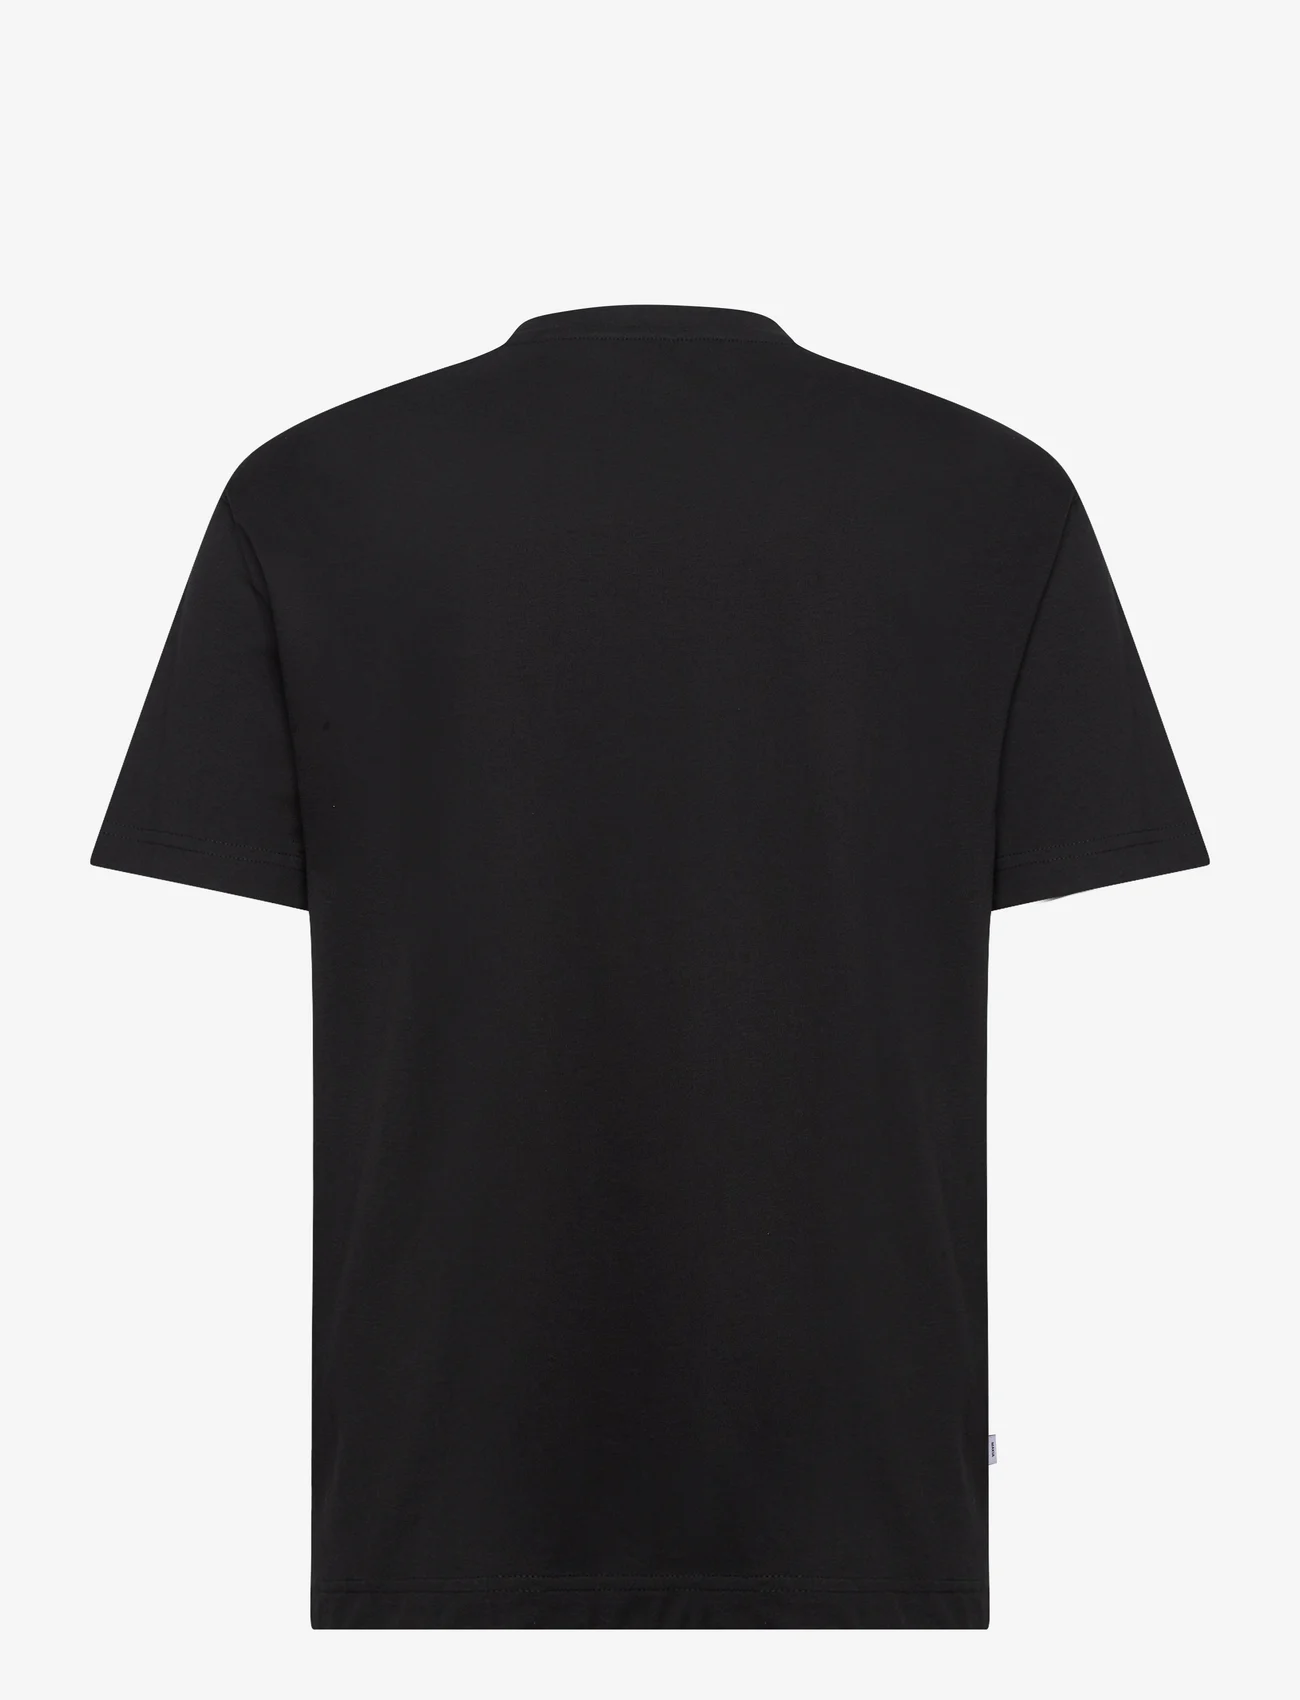 Makia - Hjalmar t-shirt - laagste prijzen - black - 1